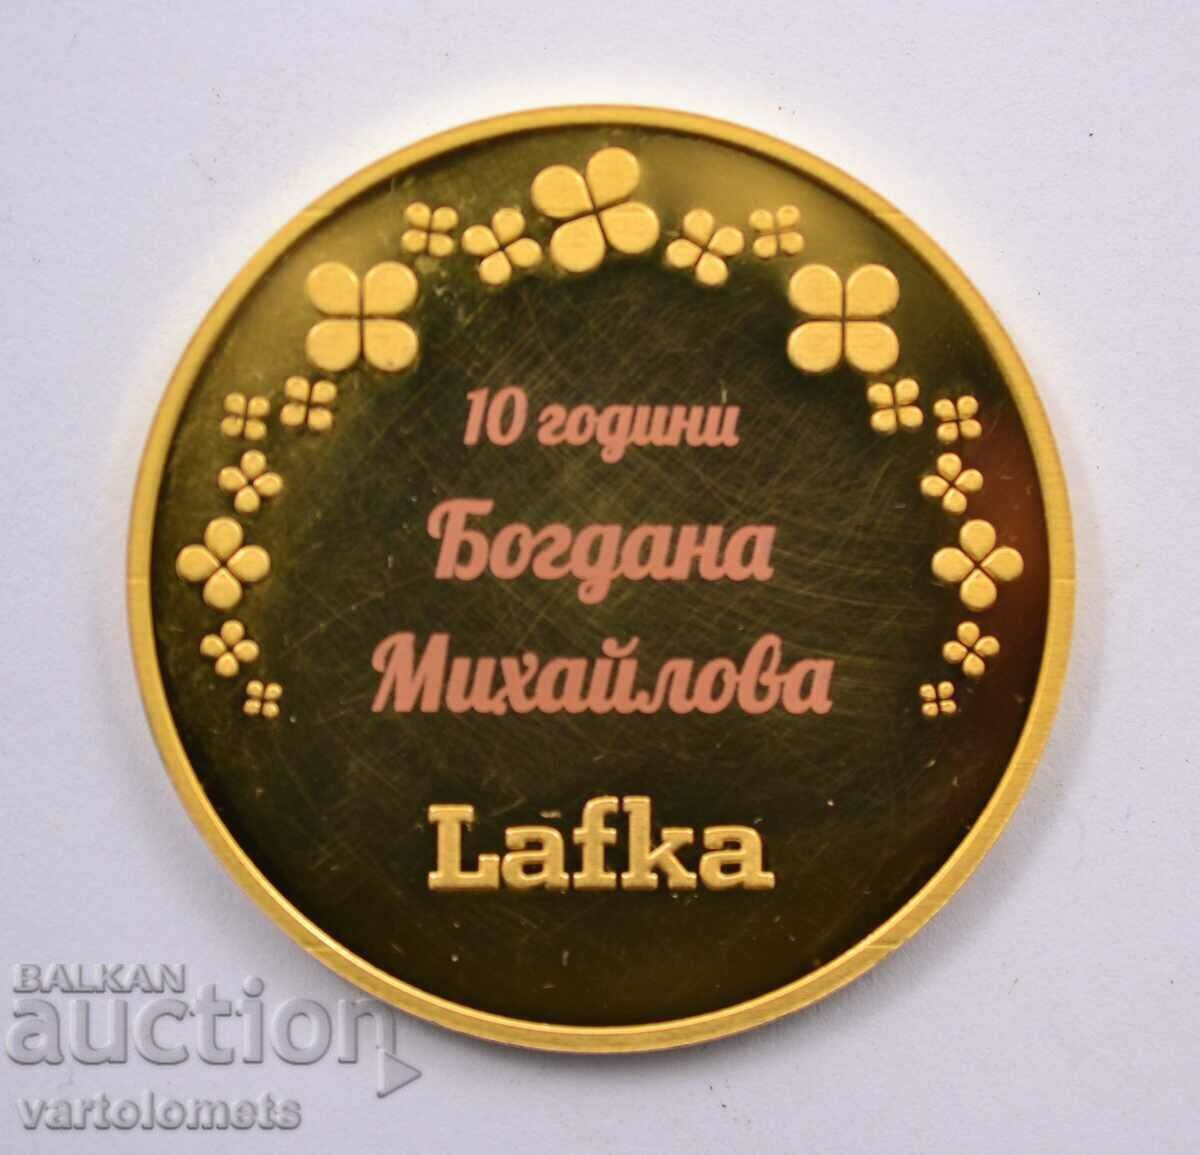 Plaque LAFKA 10 years old Bogdana Mihailova